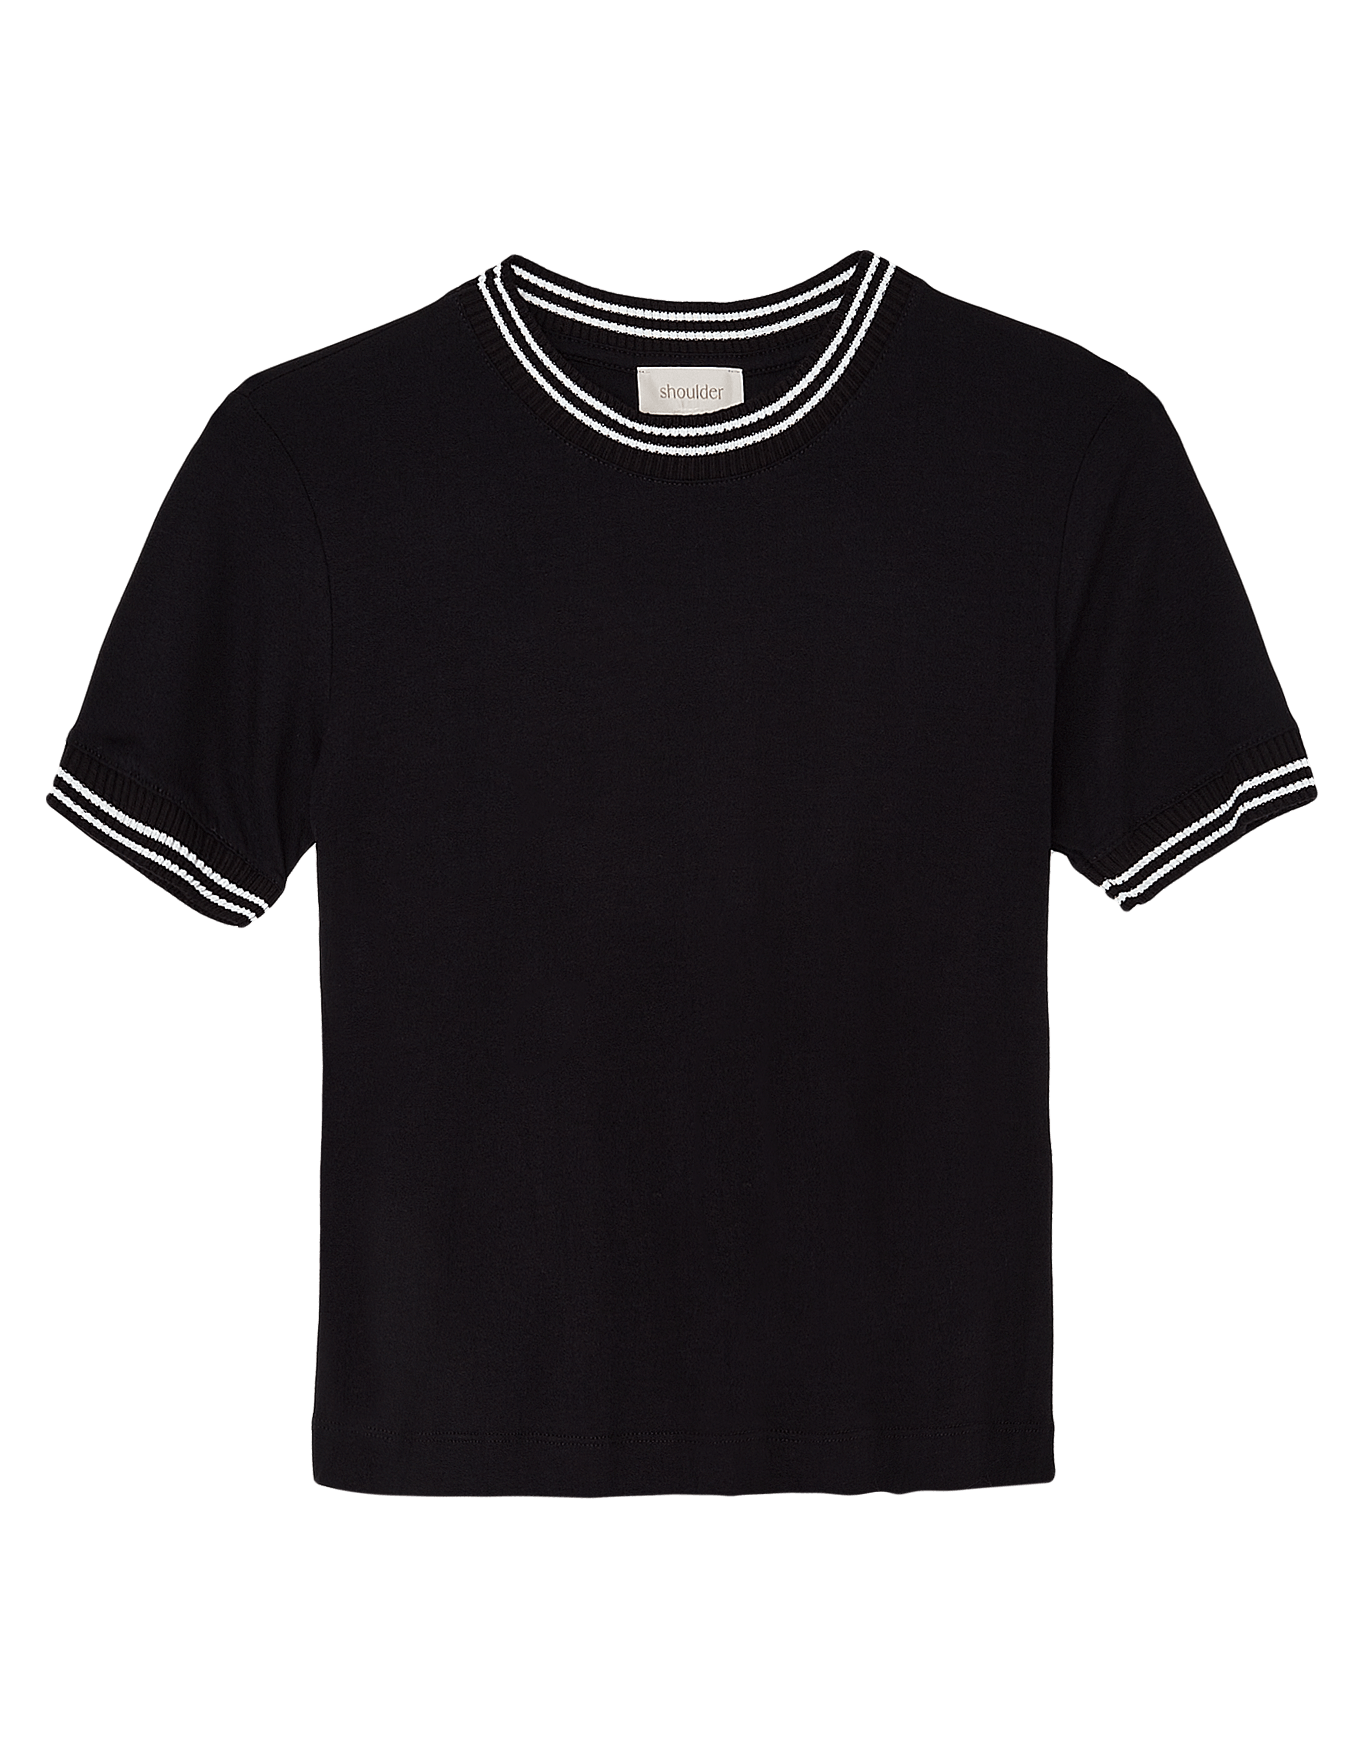 T-shirt retilínea preta - camisetas - SHOULDER